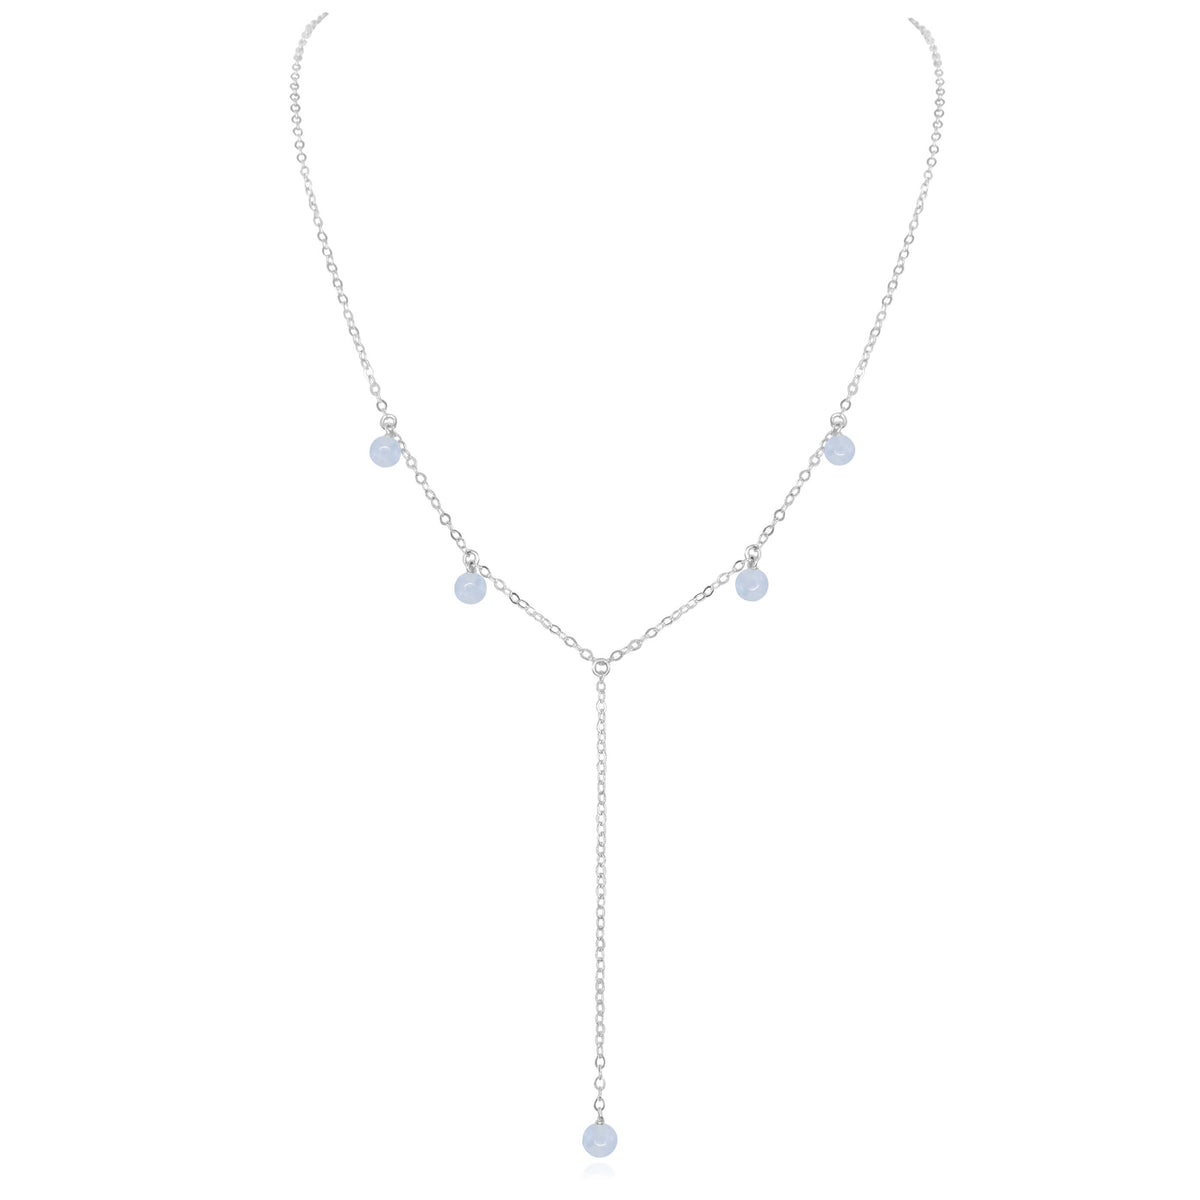 Boho Y Necklace - Blue Lace Agate - Sterling Silver - Luna Tide Handmade Jewellery